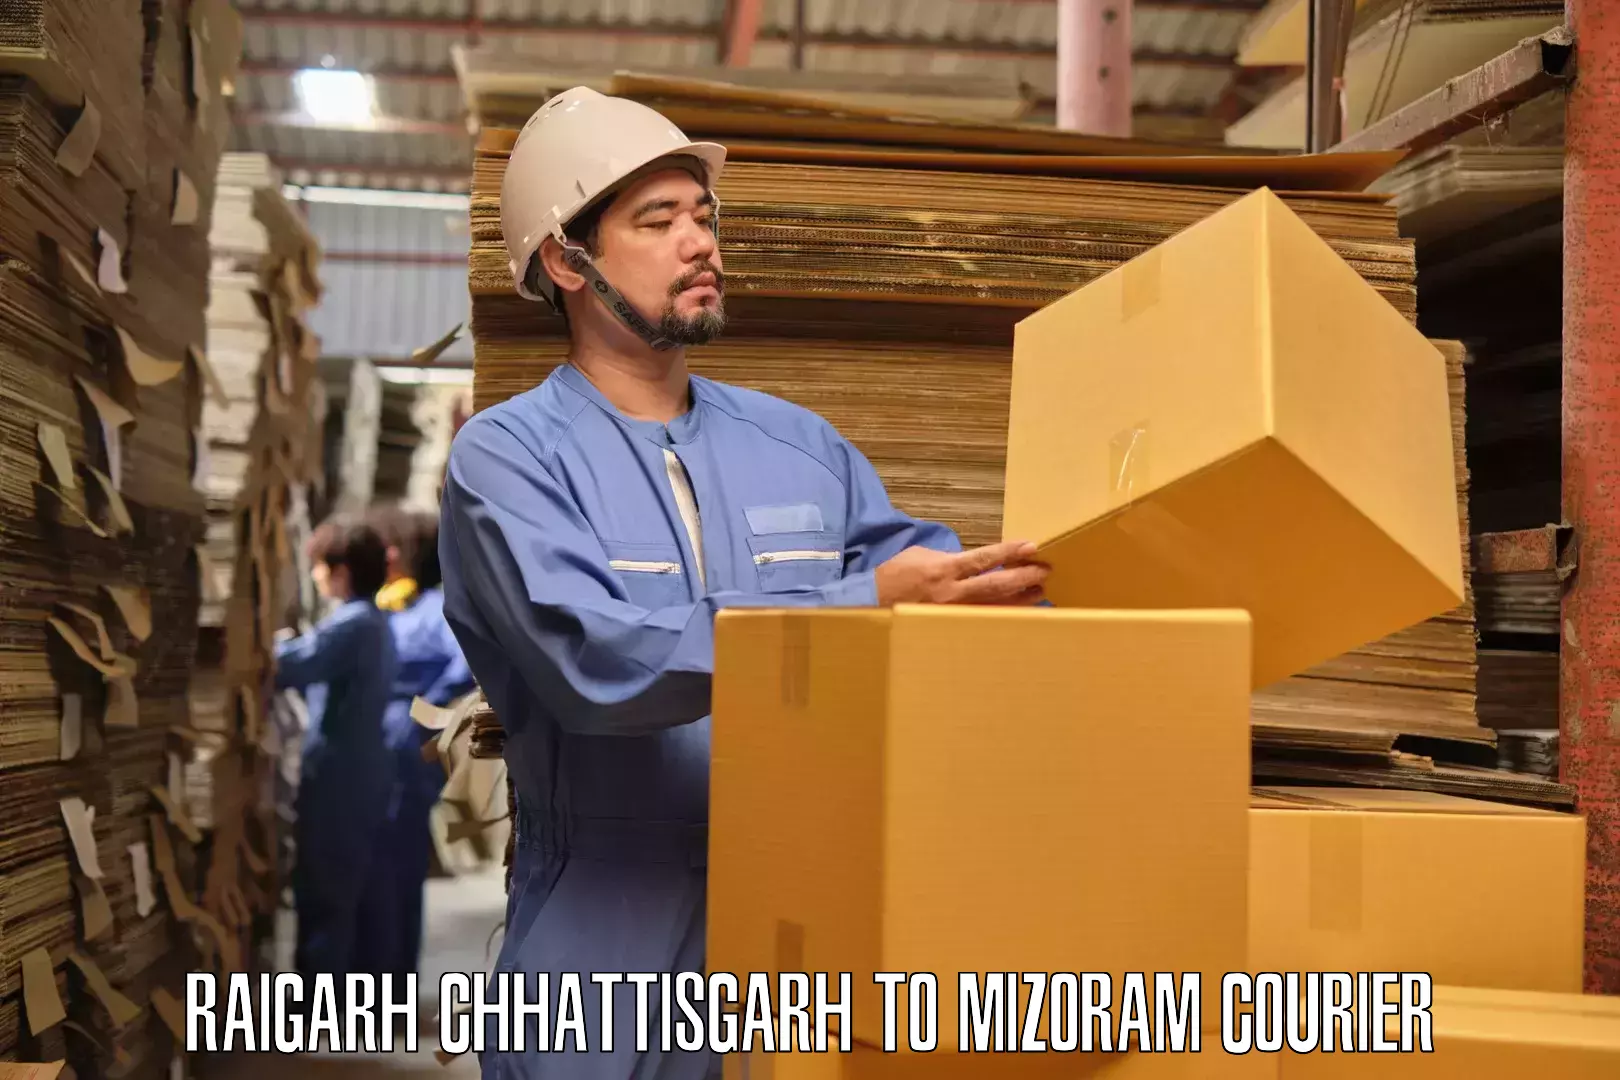 Professional furniture movers Raigarh Chhattisgarh to Siaha